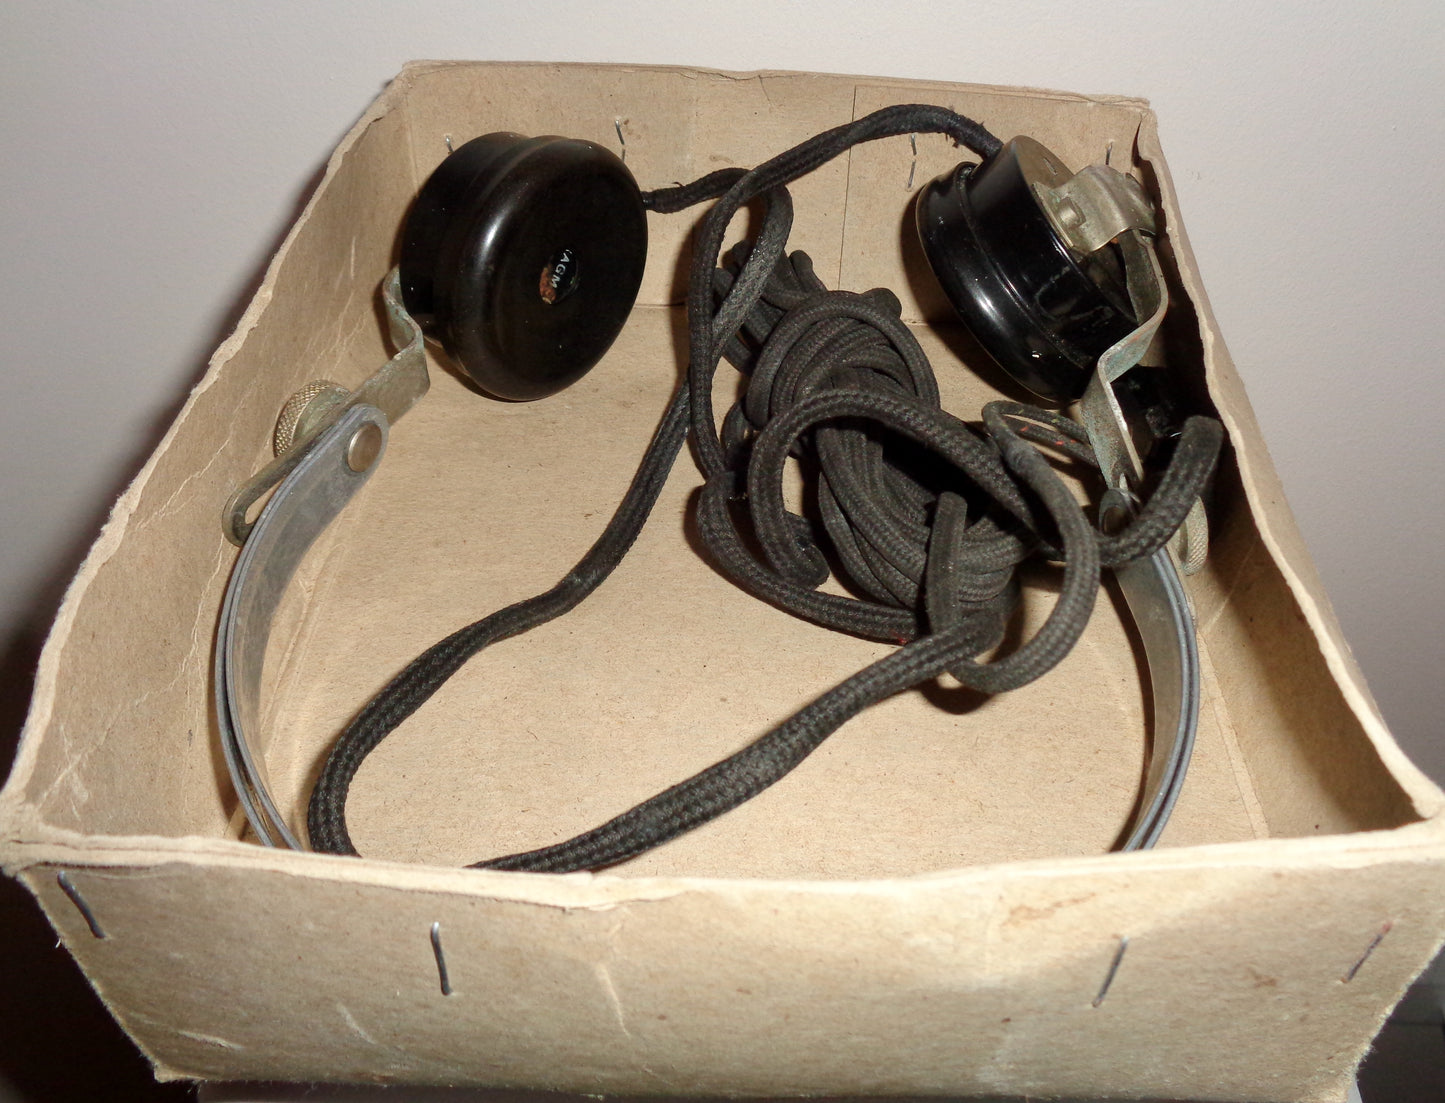 Vintage Low Impedance Head Phones 75 Ohms In Original Box